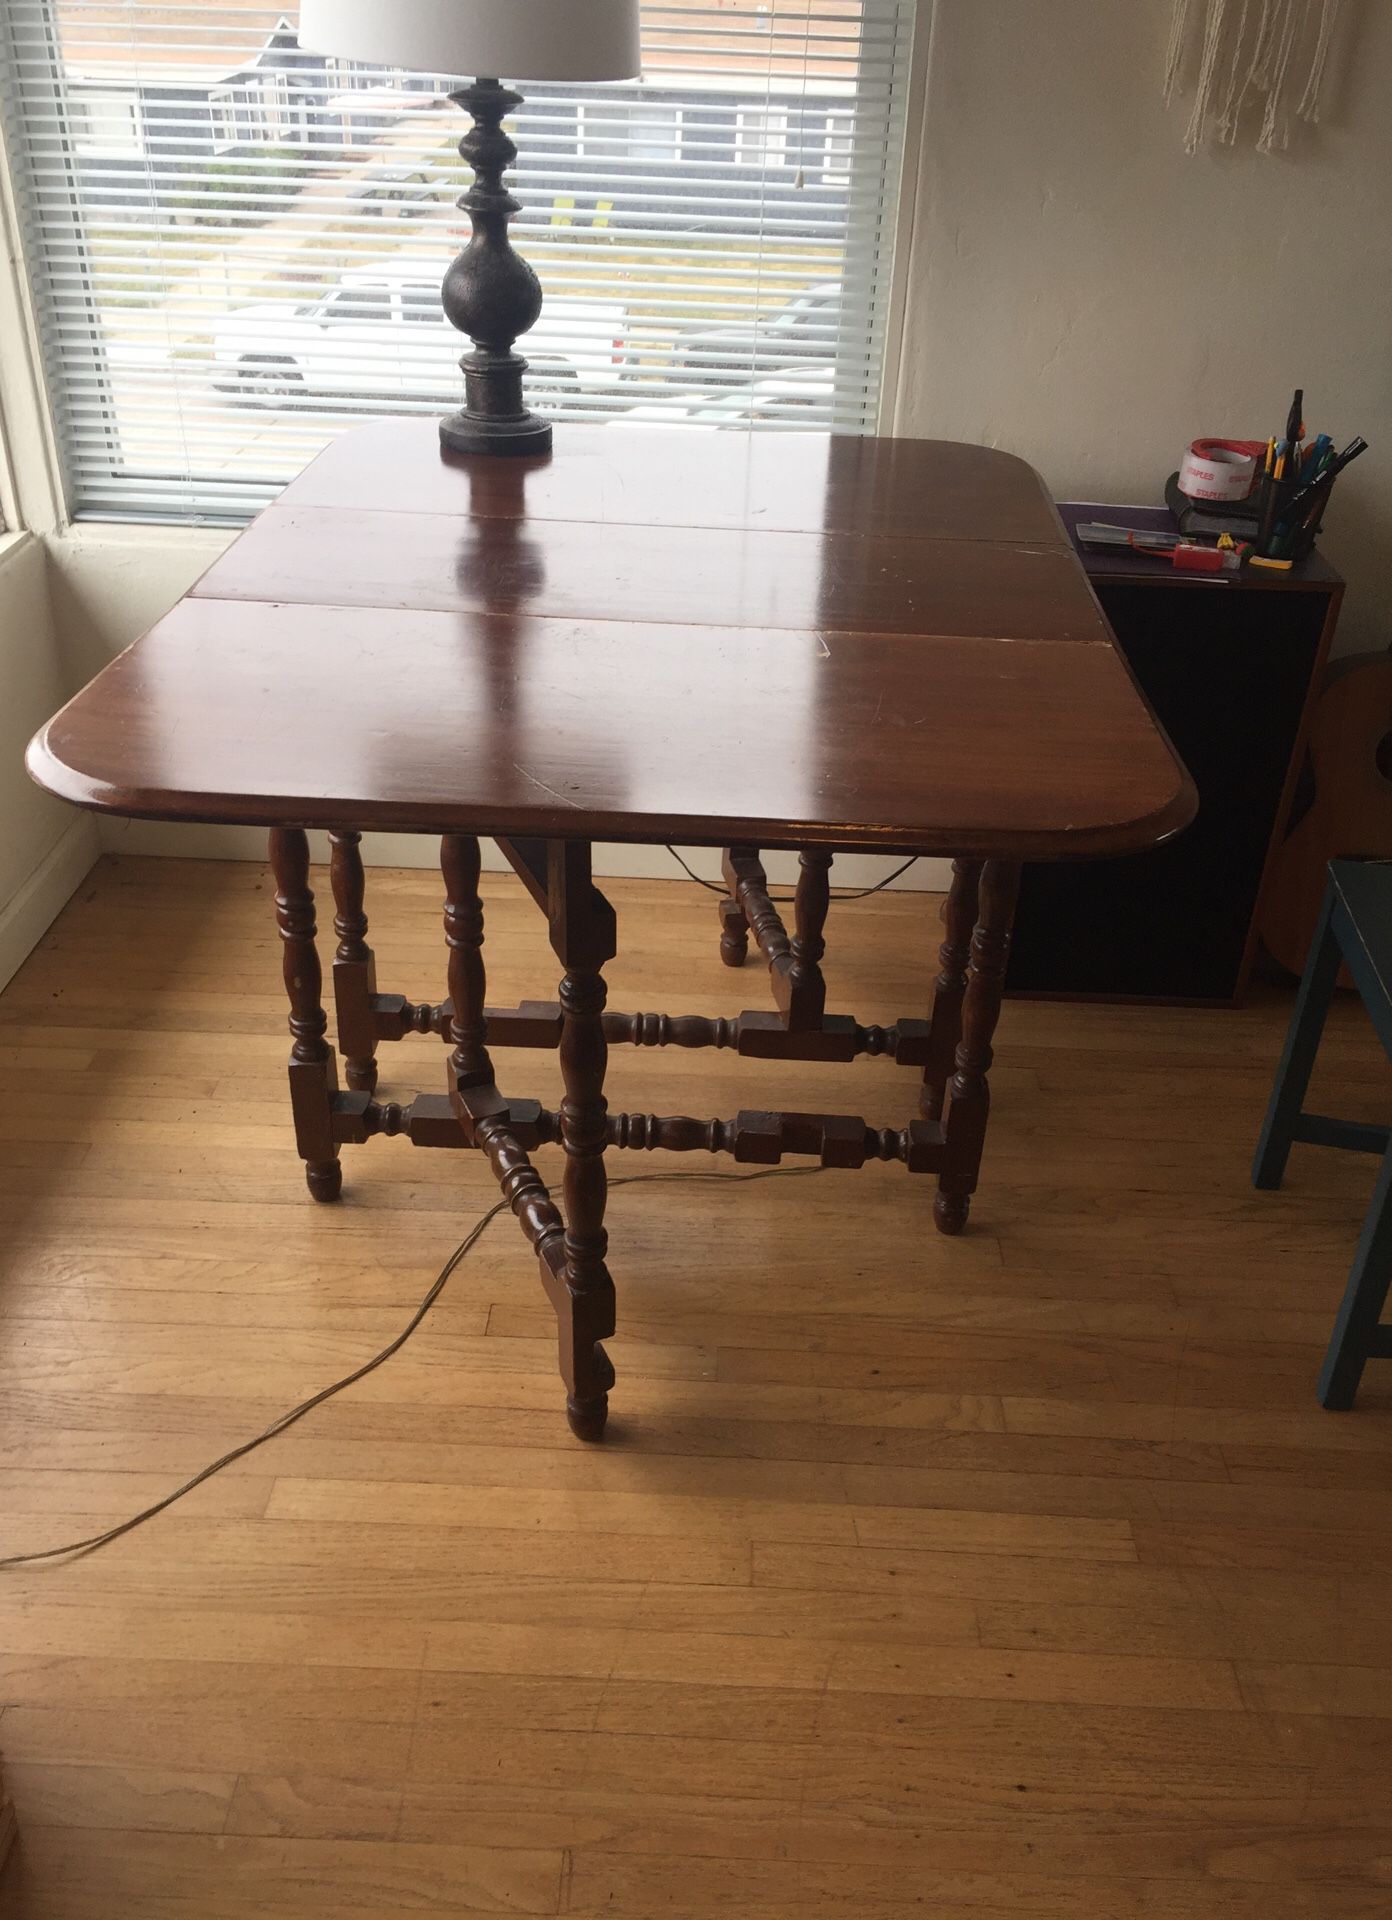 Antique table or desk